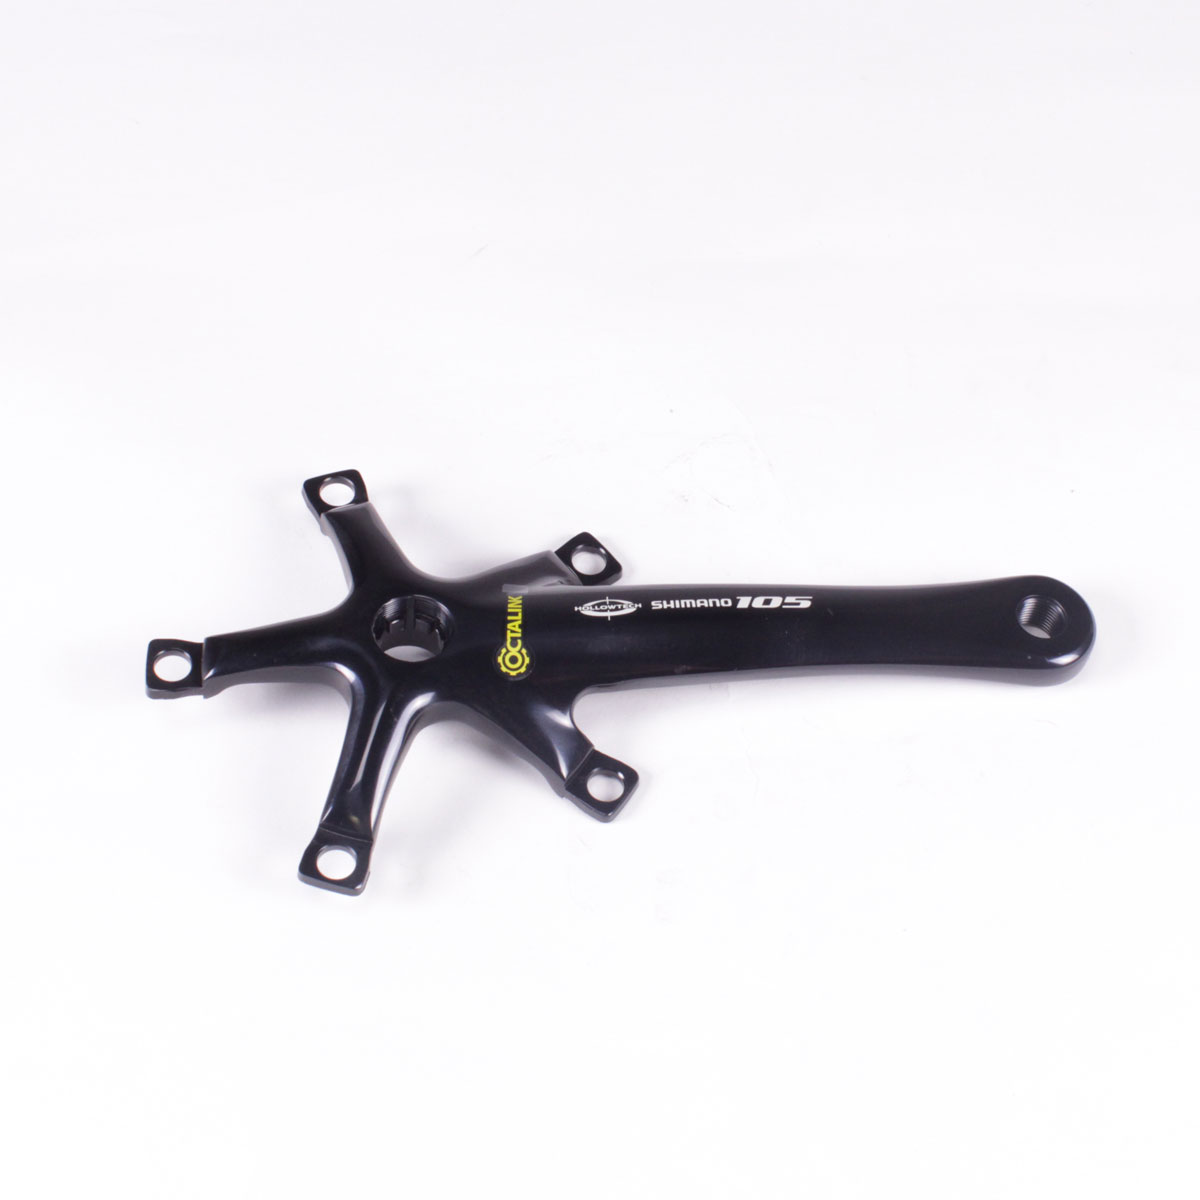 Shimano 105 FC-5502 Road Bike Drive Side Crank Arm 175mm 130 BCD Black